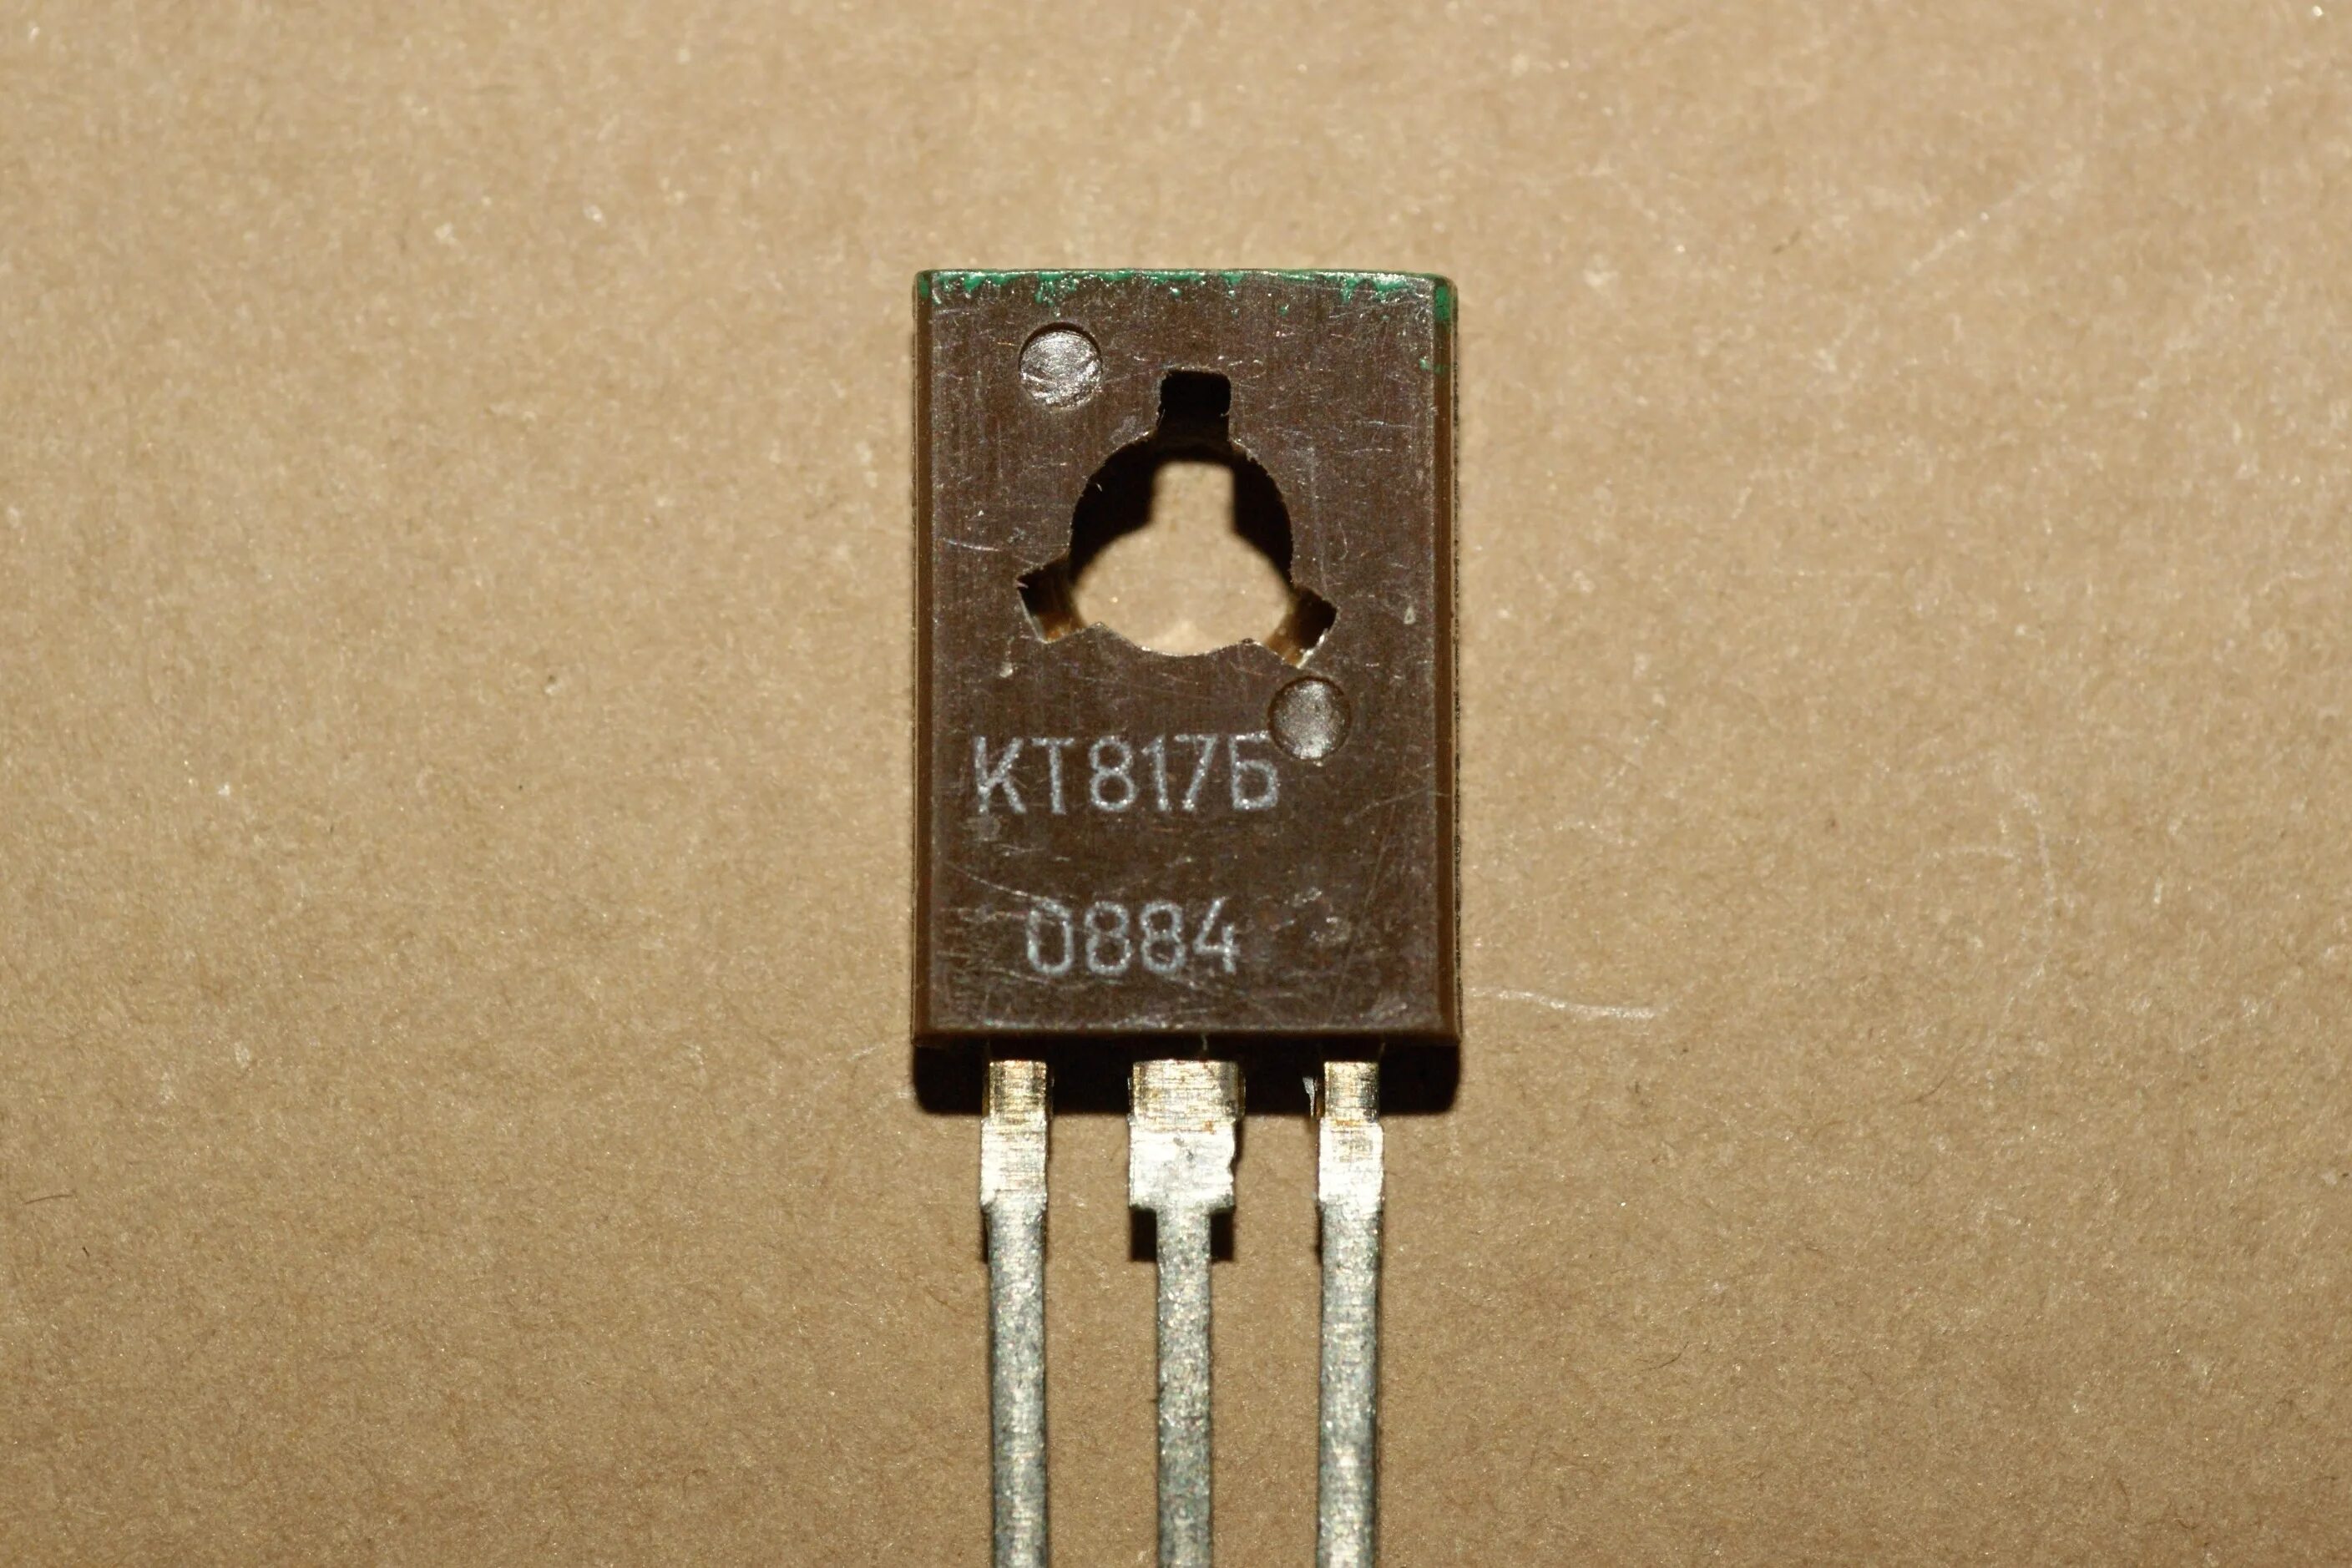 Кт 815. Транзисторы кт814 кт815 кт816 кт817. Маркировка транзисторов кт816 кт817. Кт817 SMD. Маркировка транзисторов кт814 кт815 кт816 кт817.